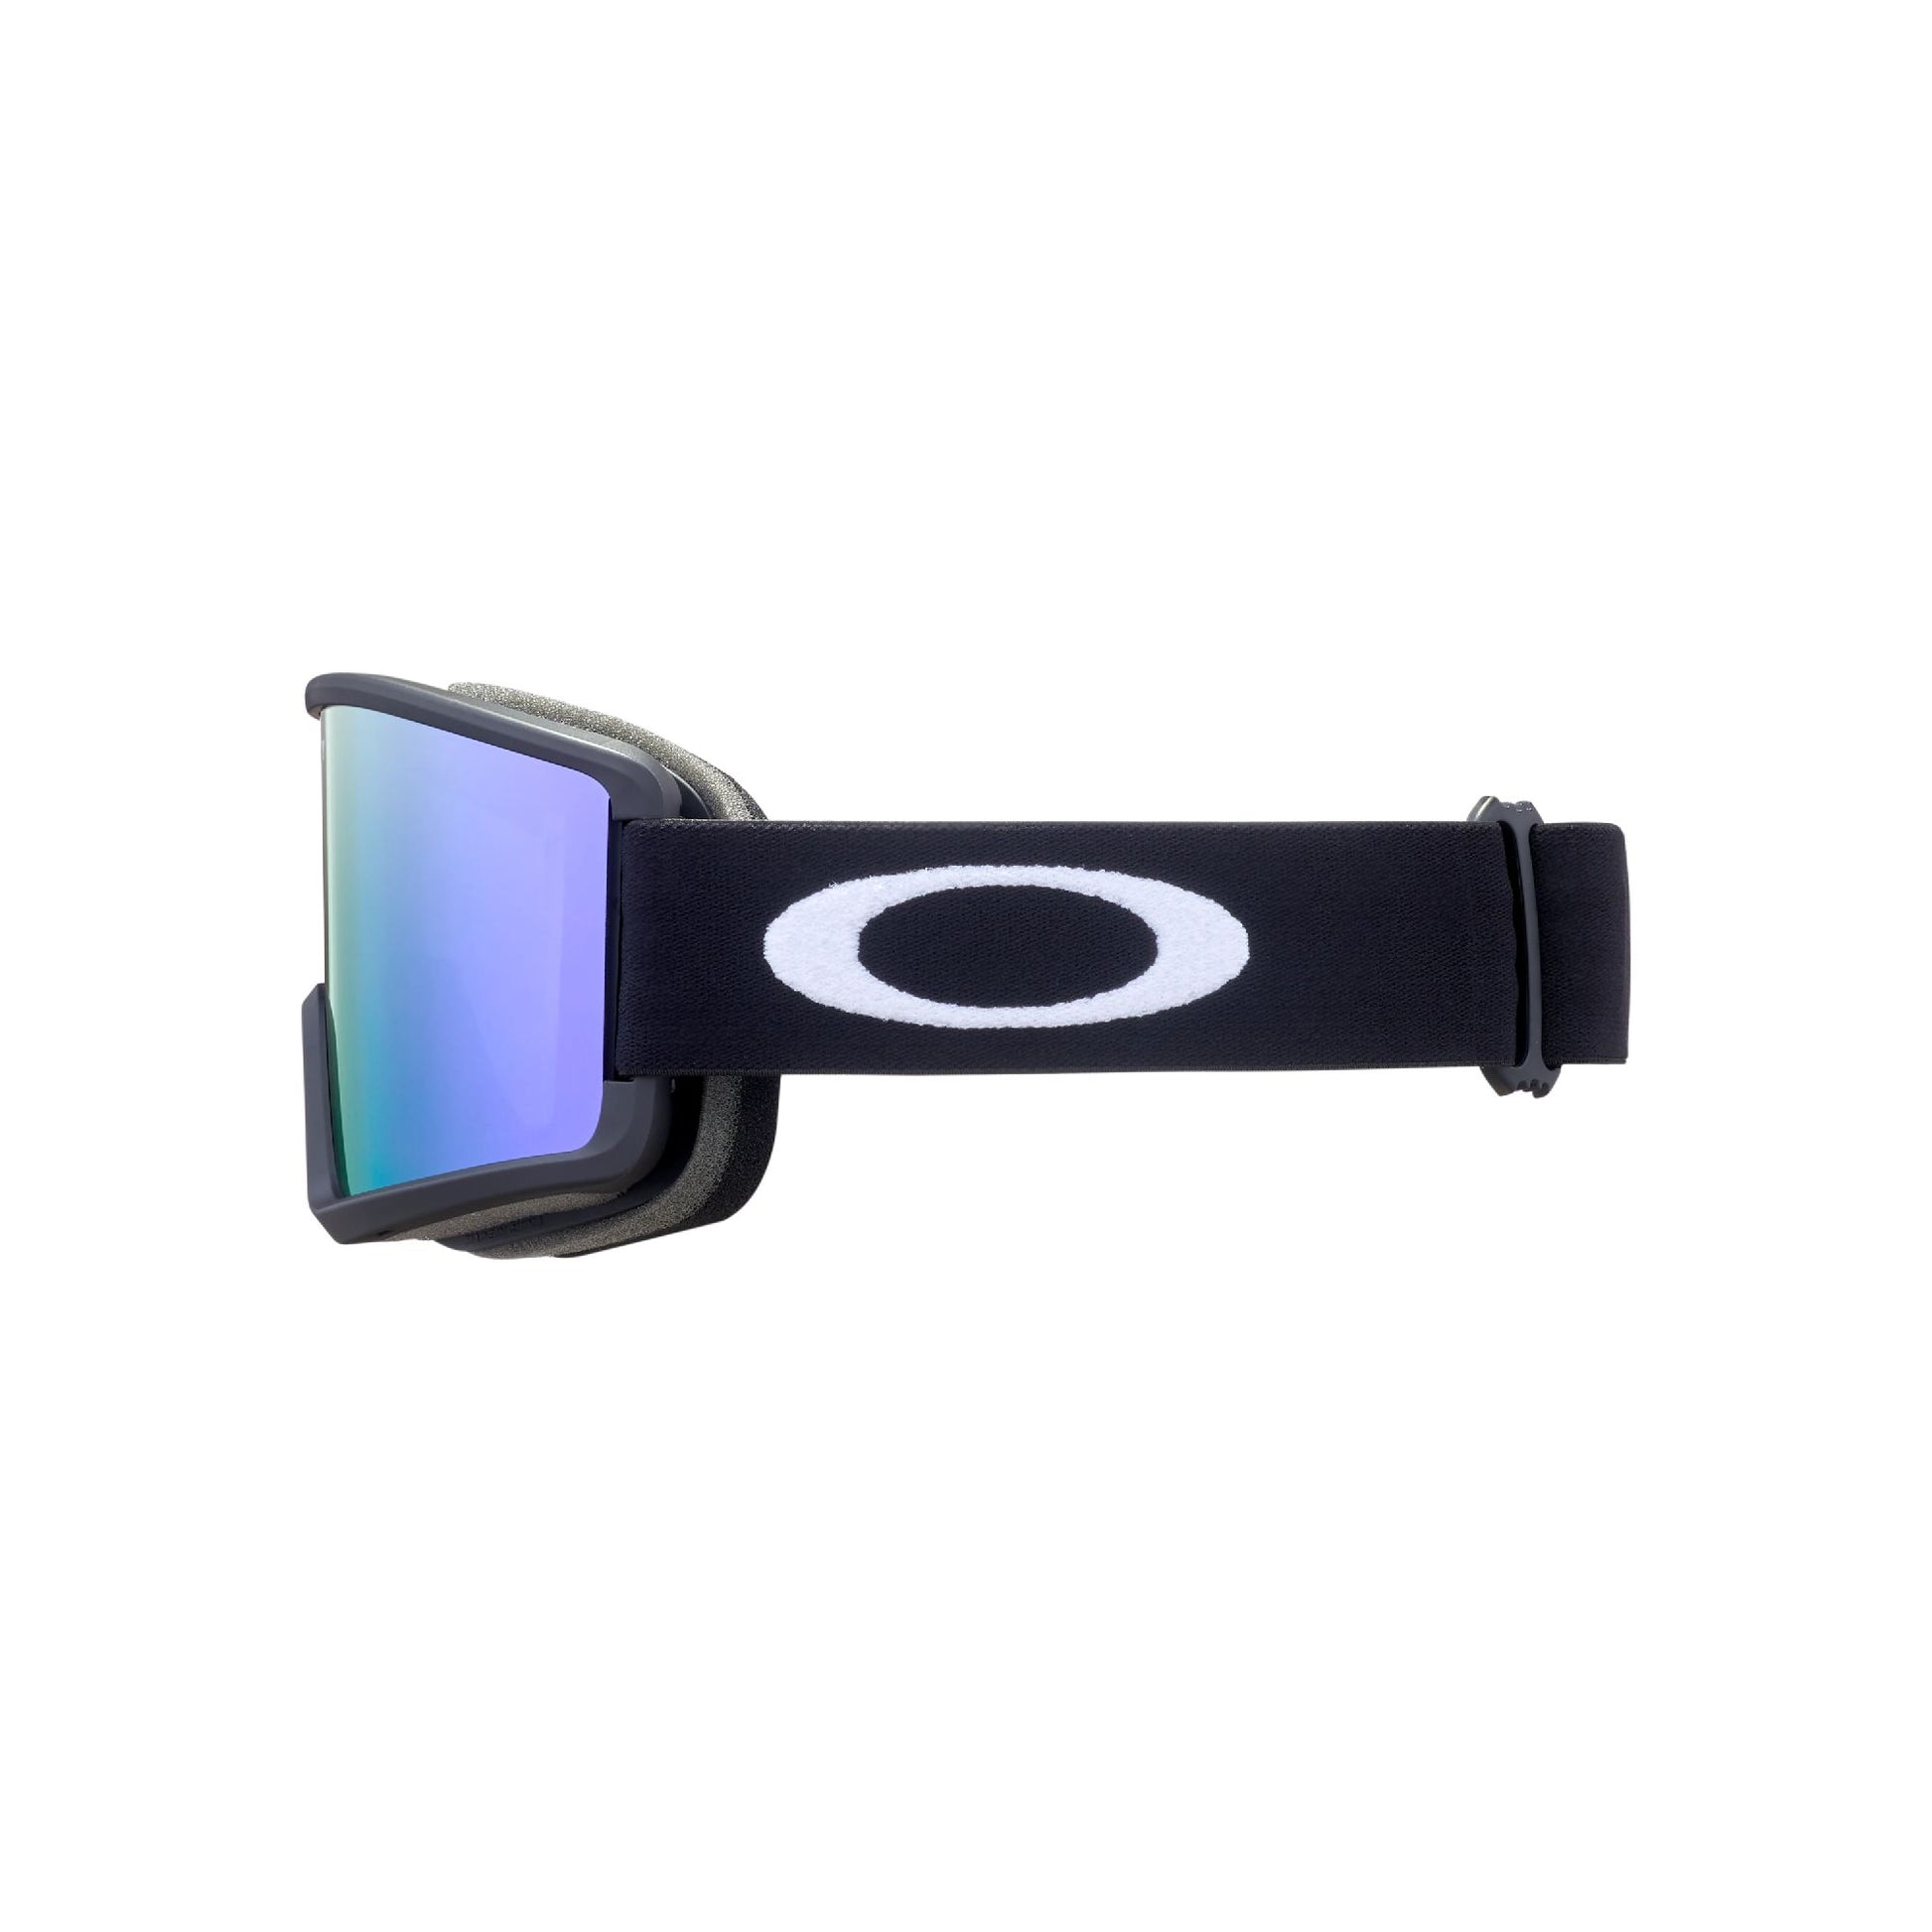 Oakley Target Line M Snow Goggles Matte Black Violet Iridium Snow Goggles